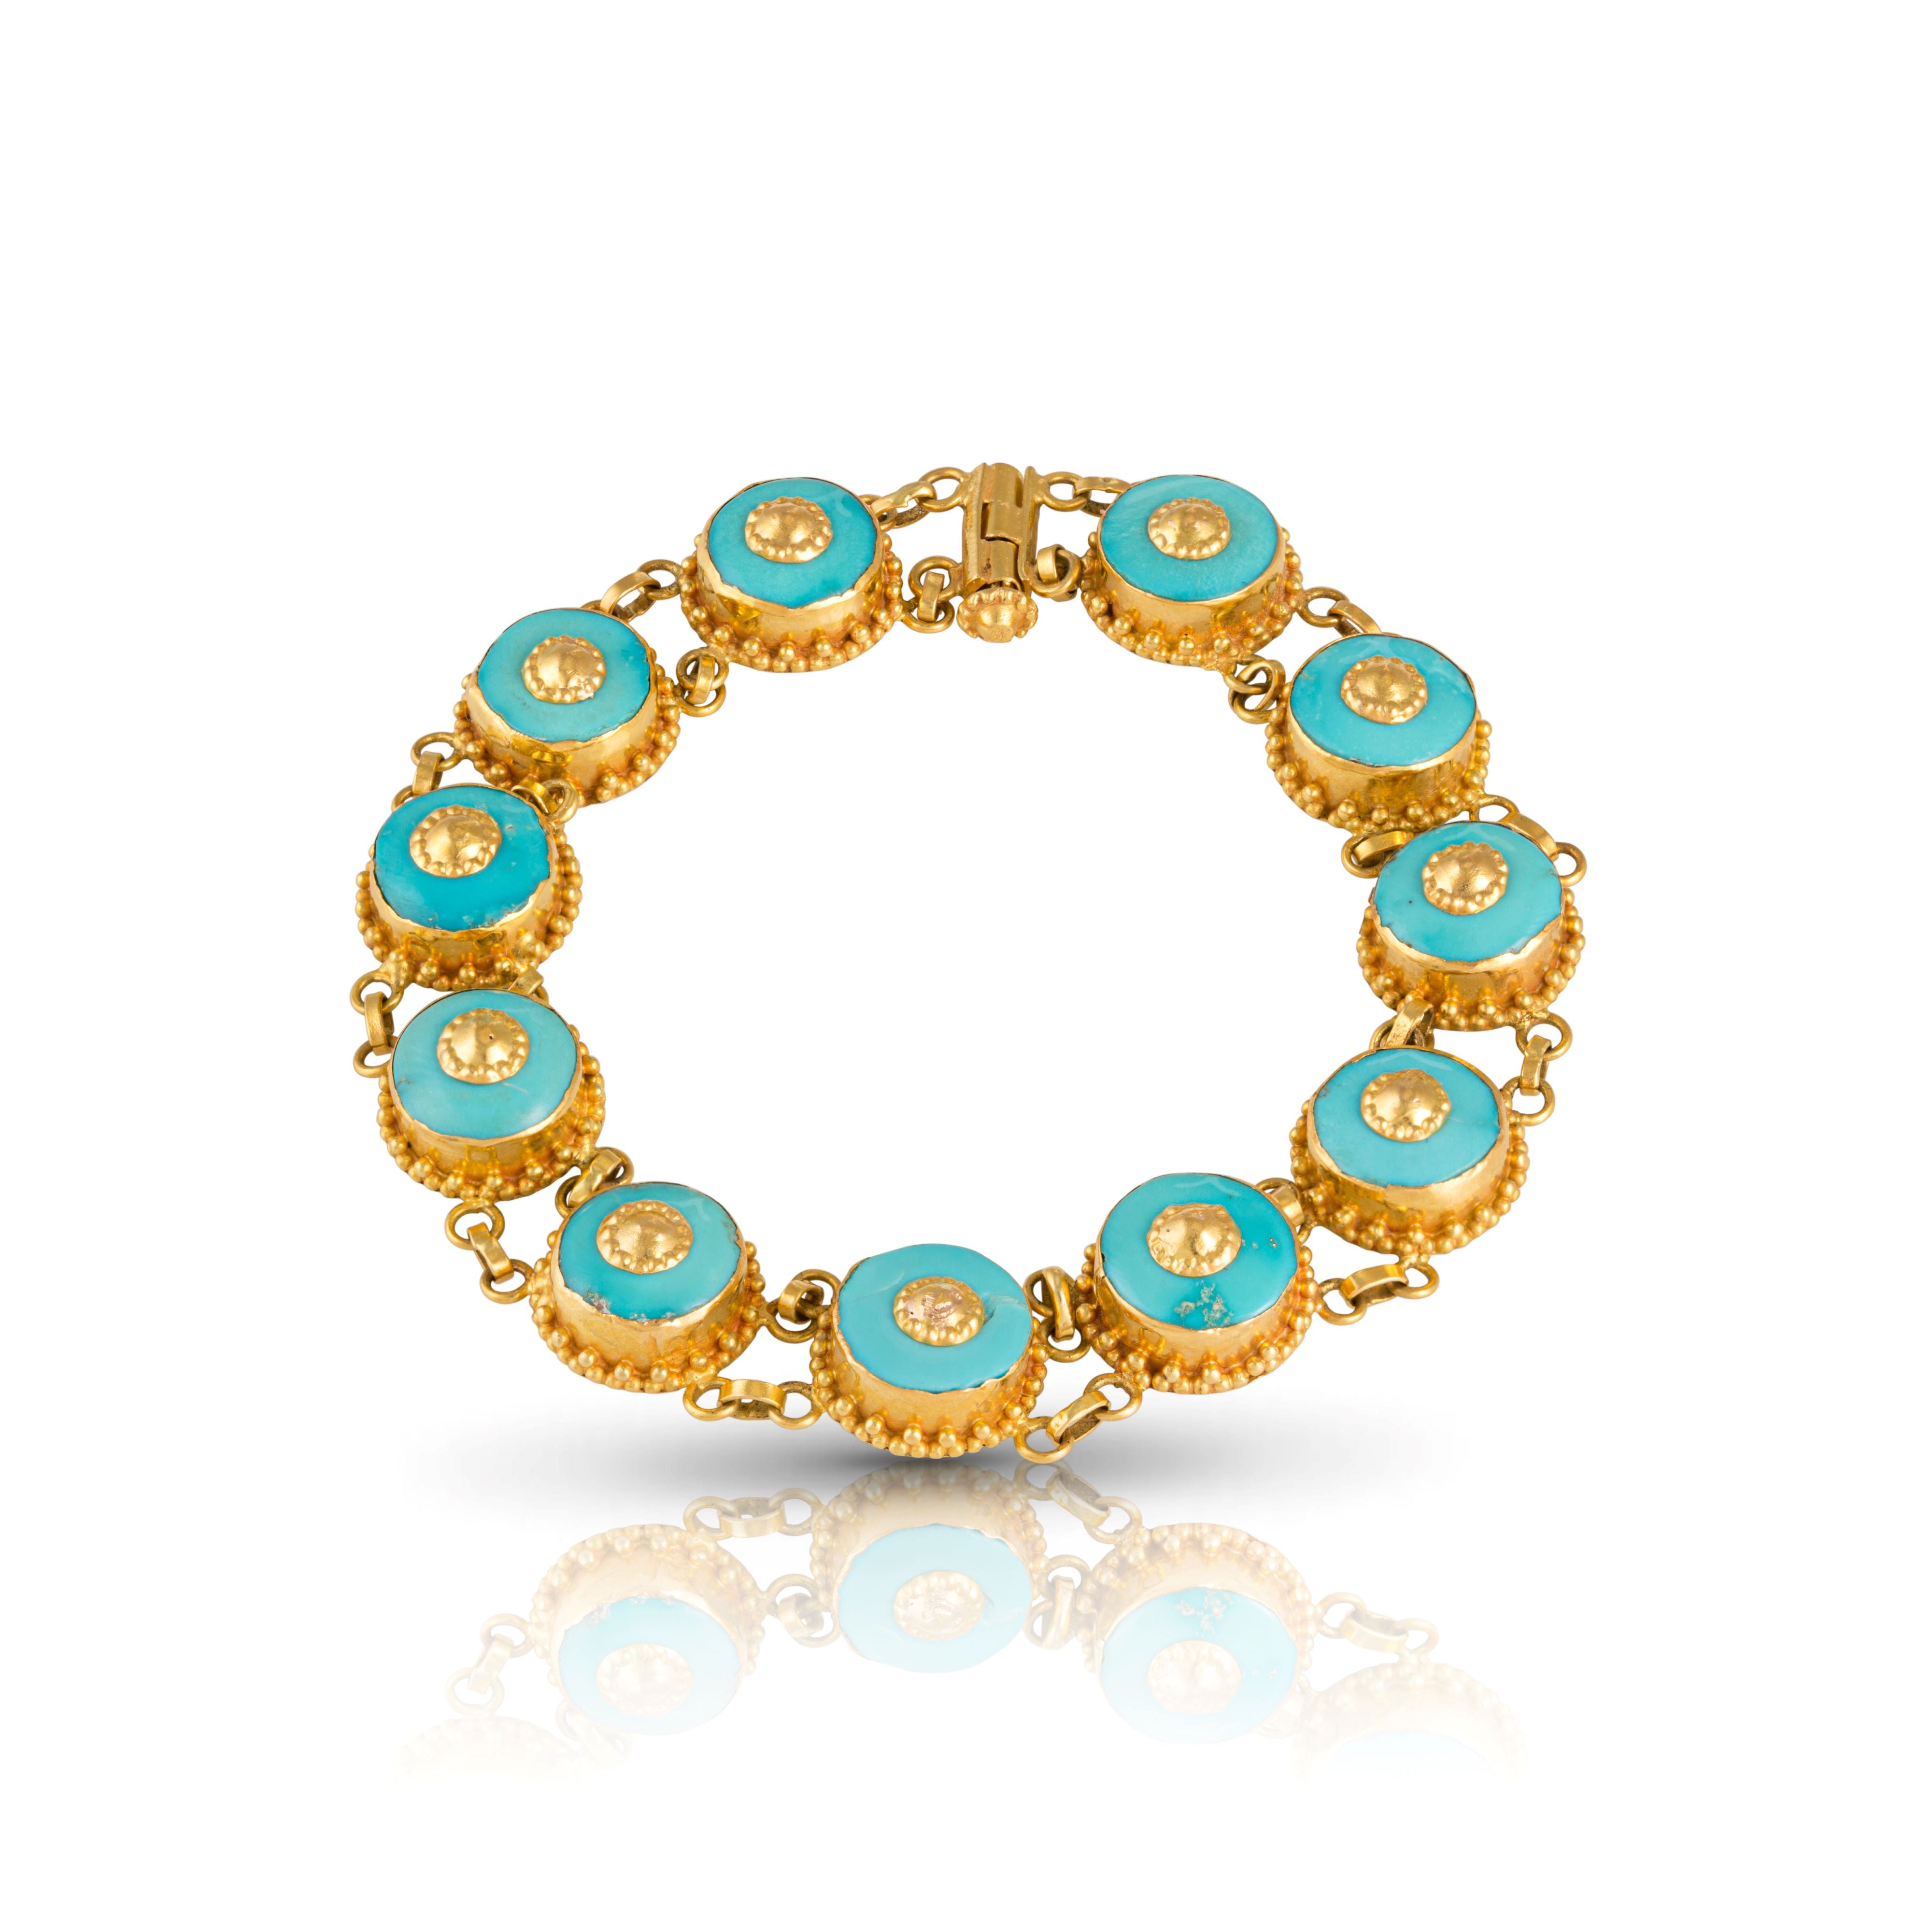 Vintage turquoise bracelet in 14ct gold button motif.